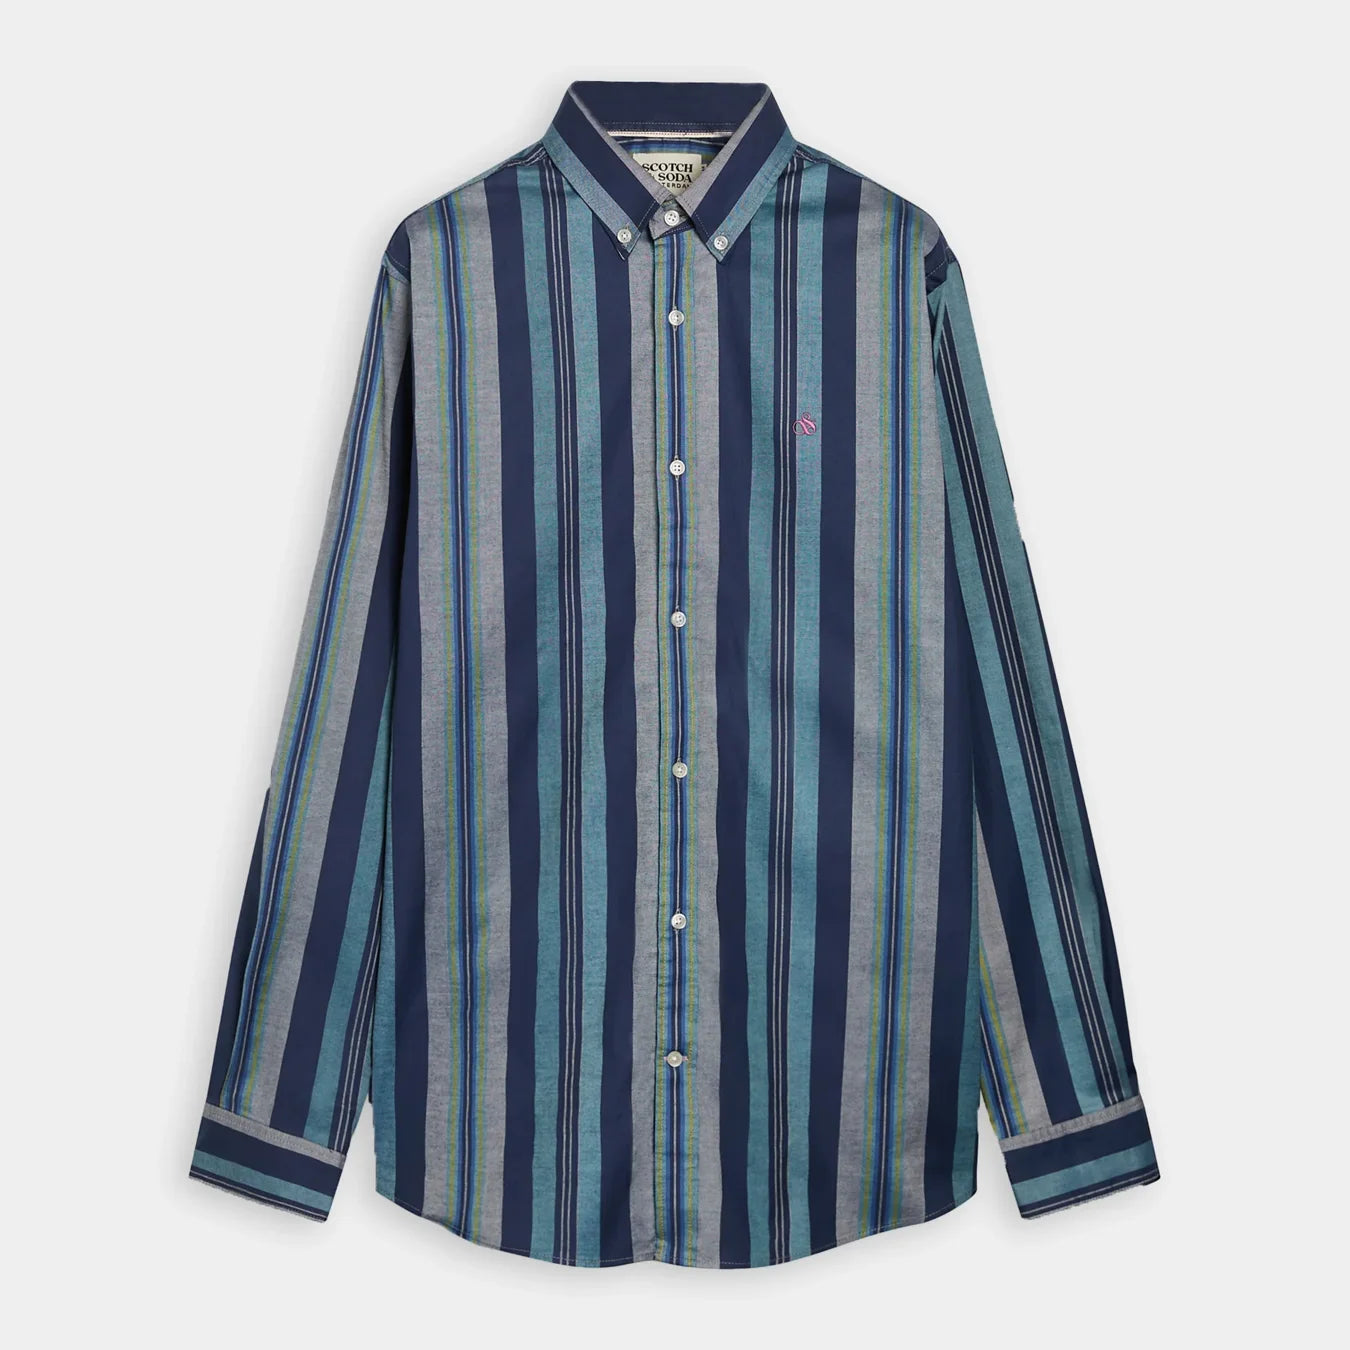 'Scotch & Soda Essential Oxford Stripe Shirt' in 'Navy' colour